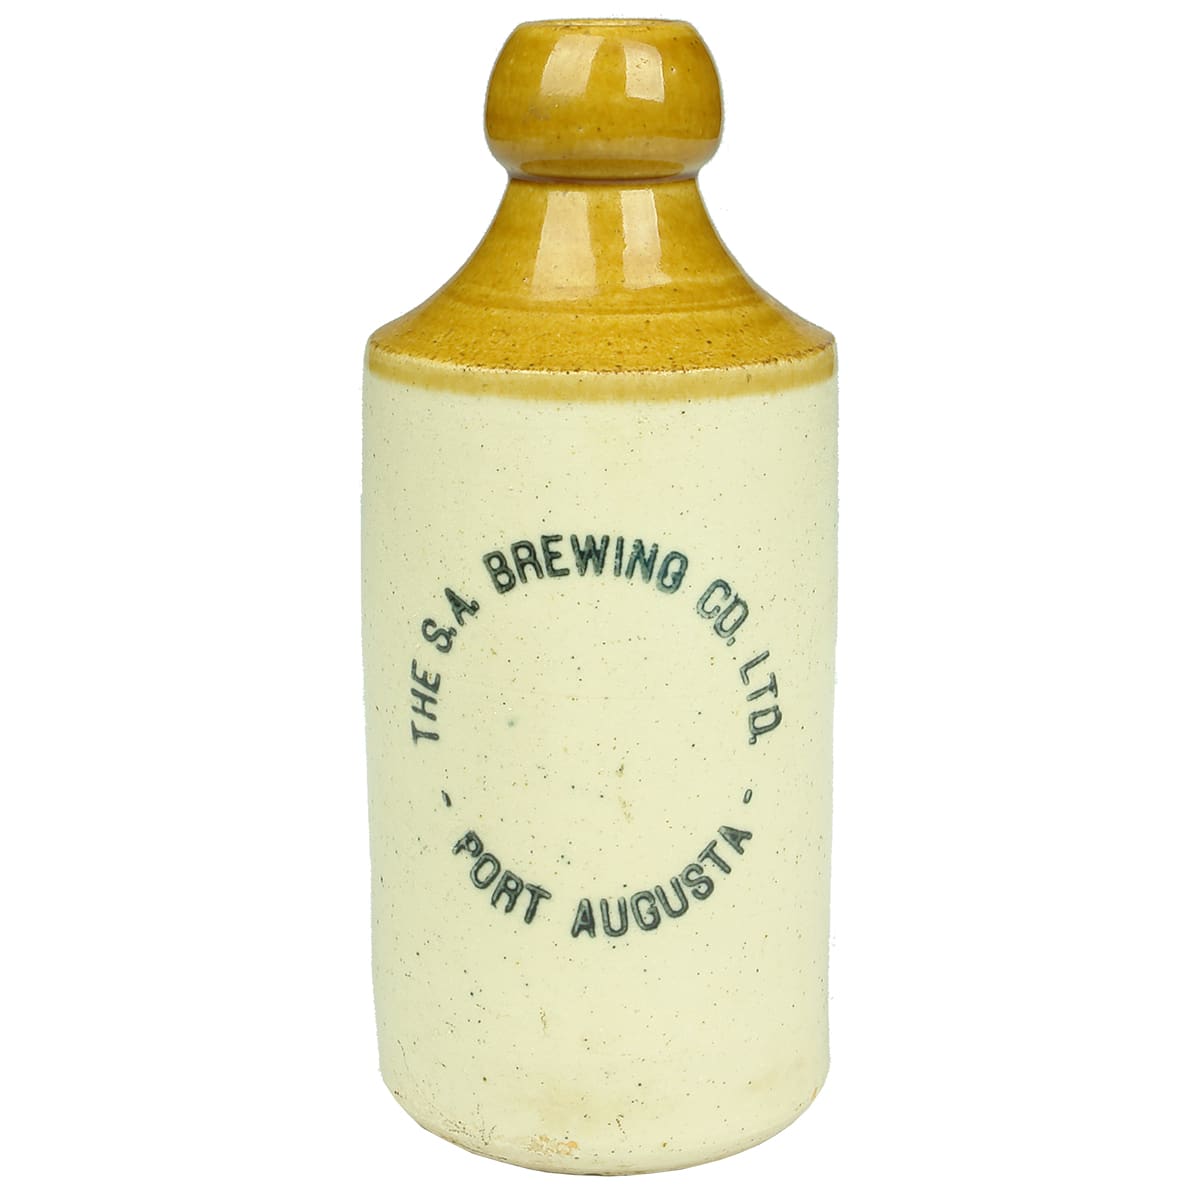 Ginger Beer.  S. A. Brewing Co. Ltd., Port Augusta. Cork stopper. Dump. Tan top.